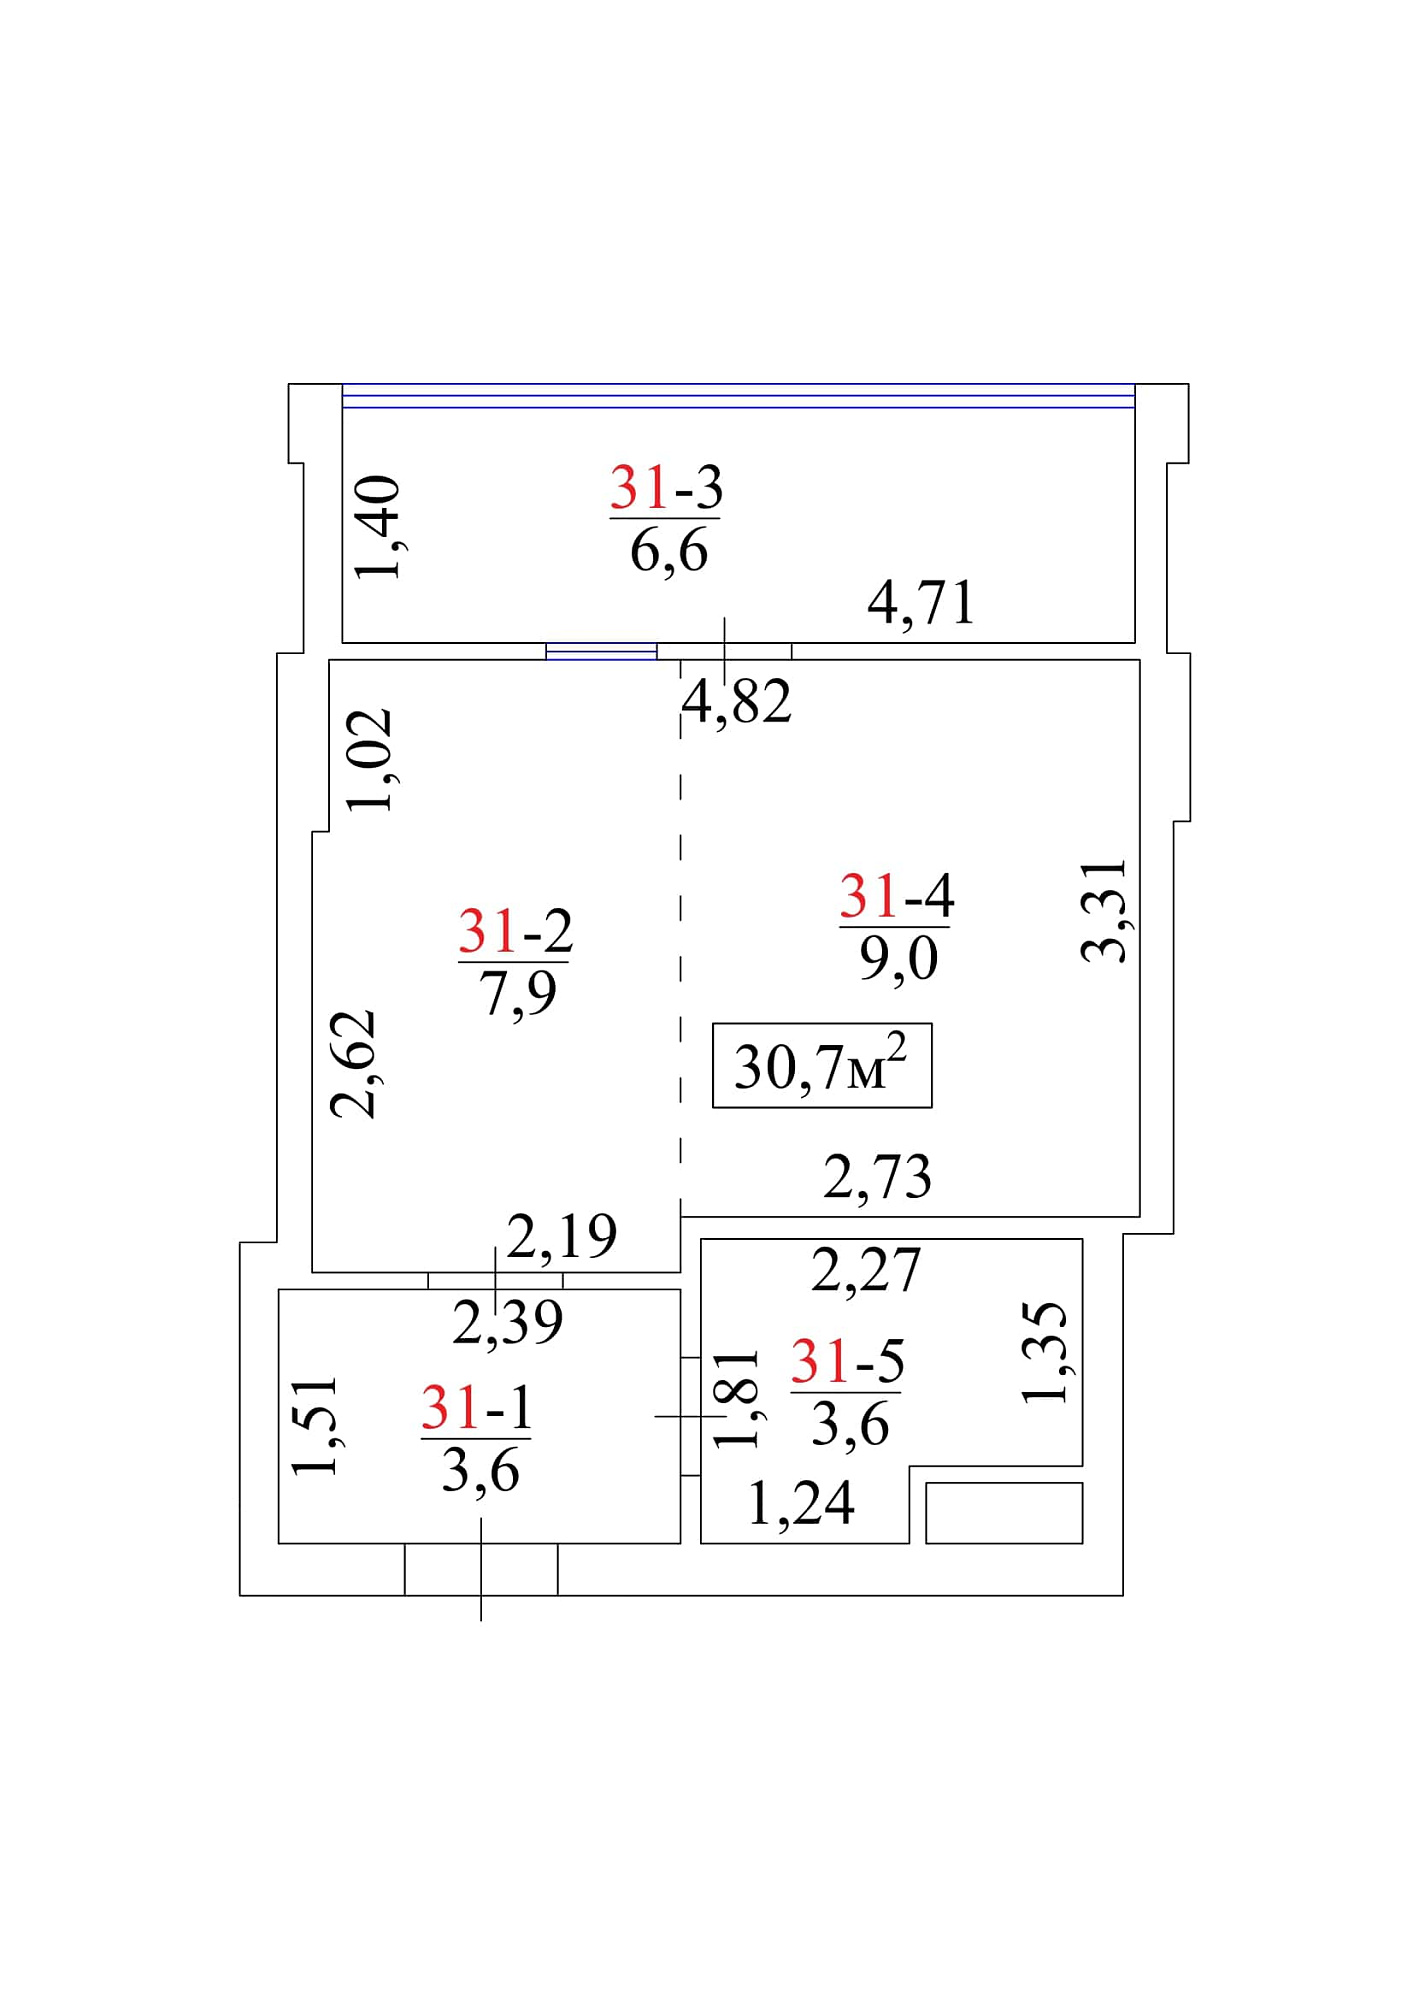 Planning Smart flats area 30.7m2, AB-01-04/00031.